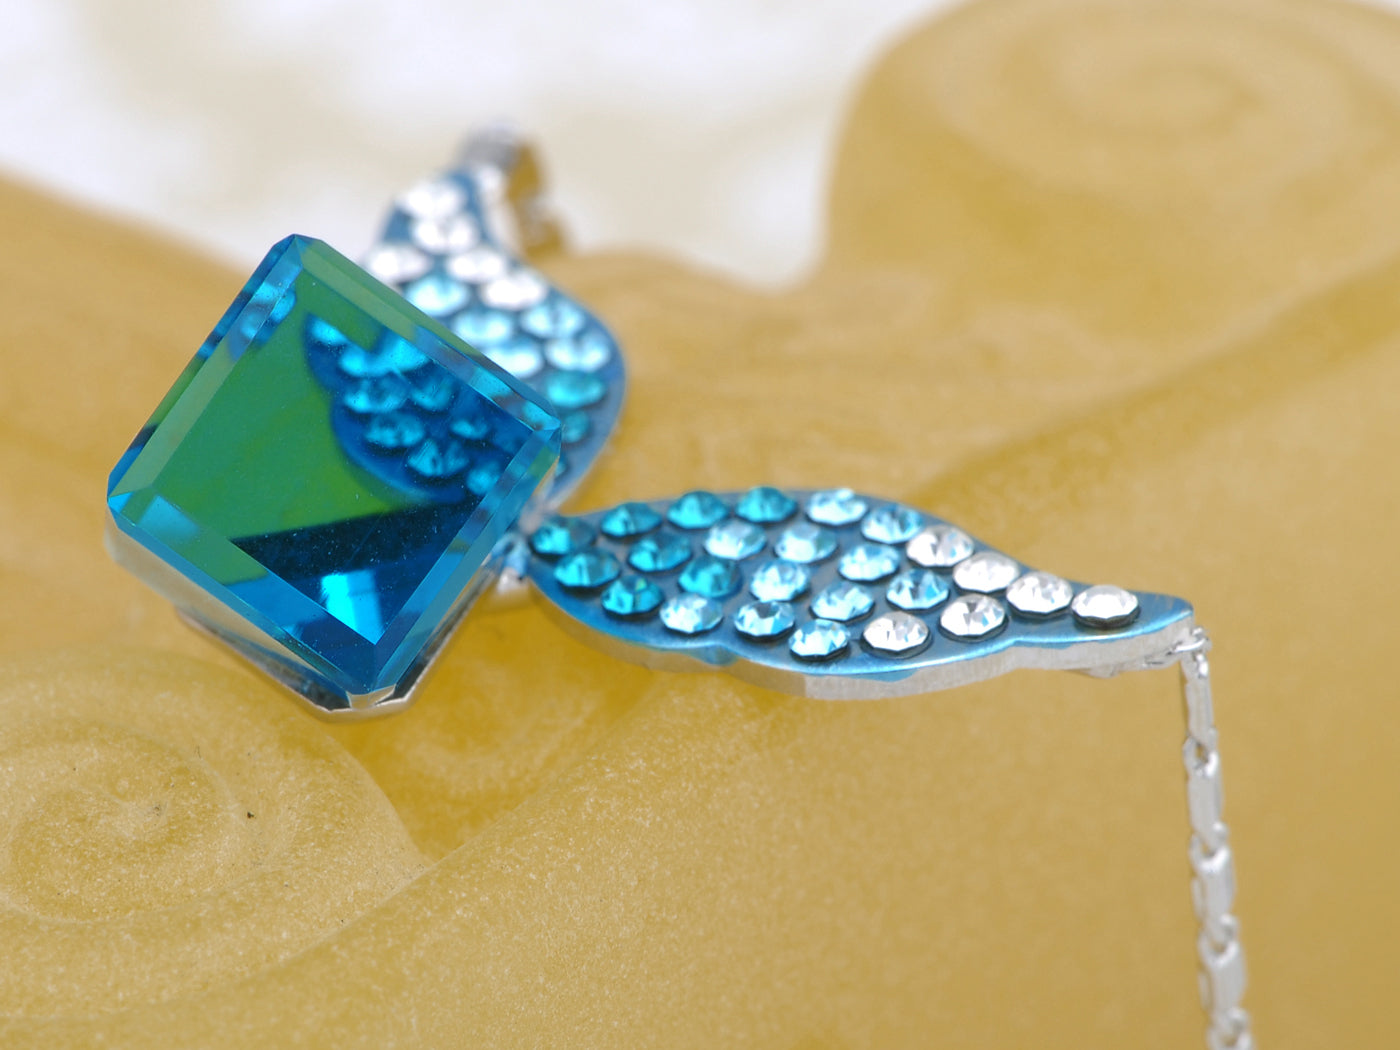 Indicolite Blue Cube Winged Pixie Spirit Element Necklace